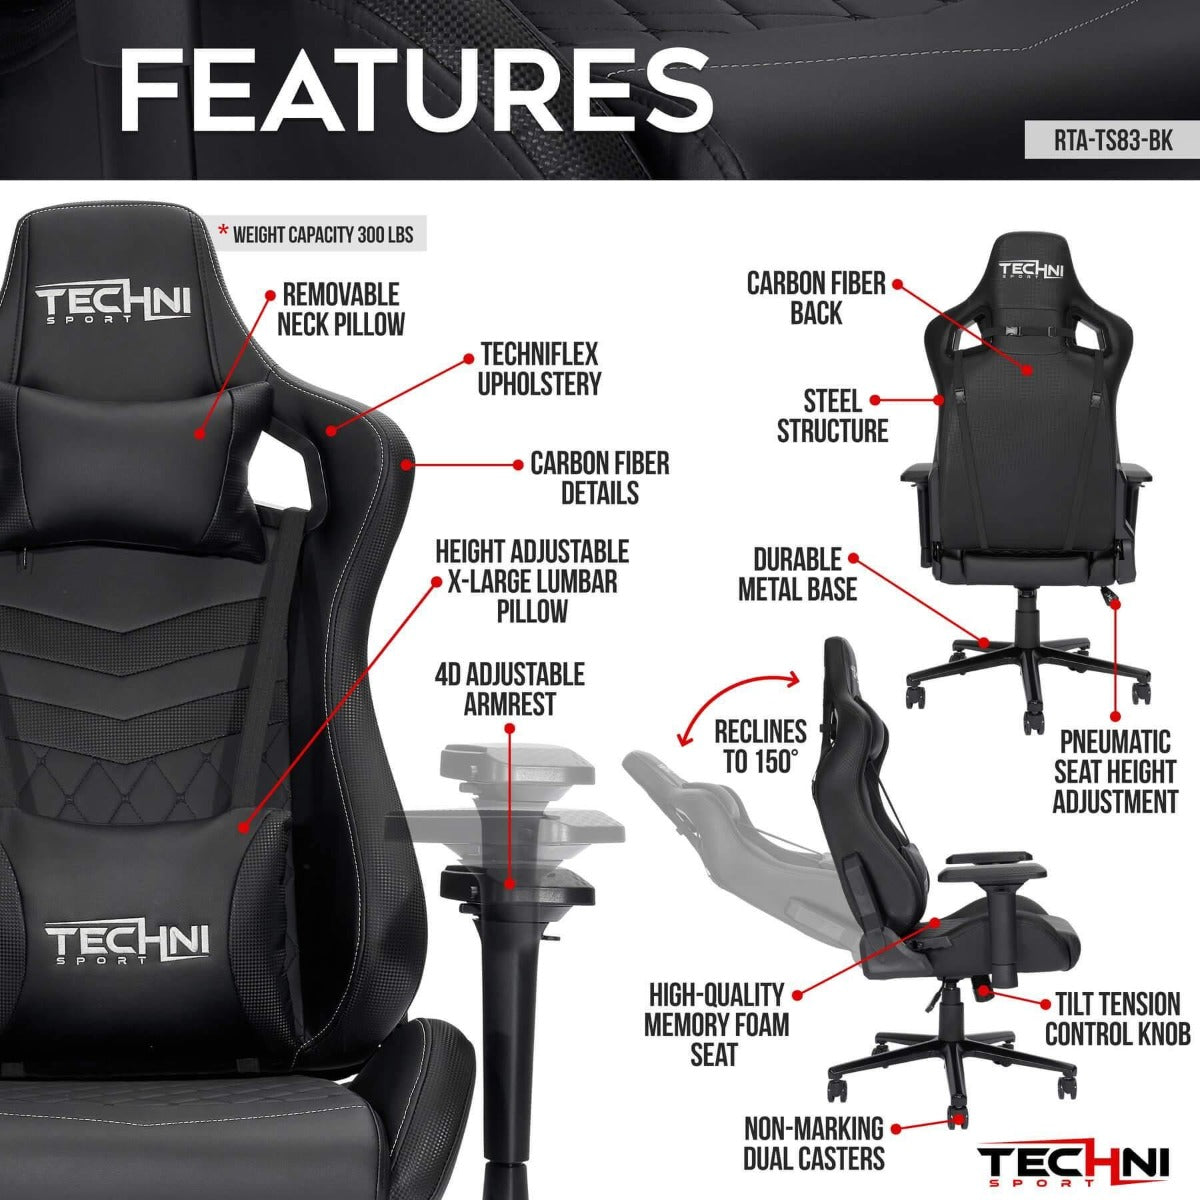 Techni Sport TS-83 Black Ergonomic High Back Racer Style PC Gaming Chair RTA-TS83-BK Features